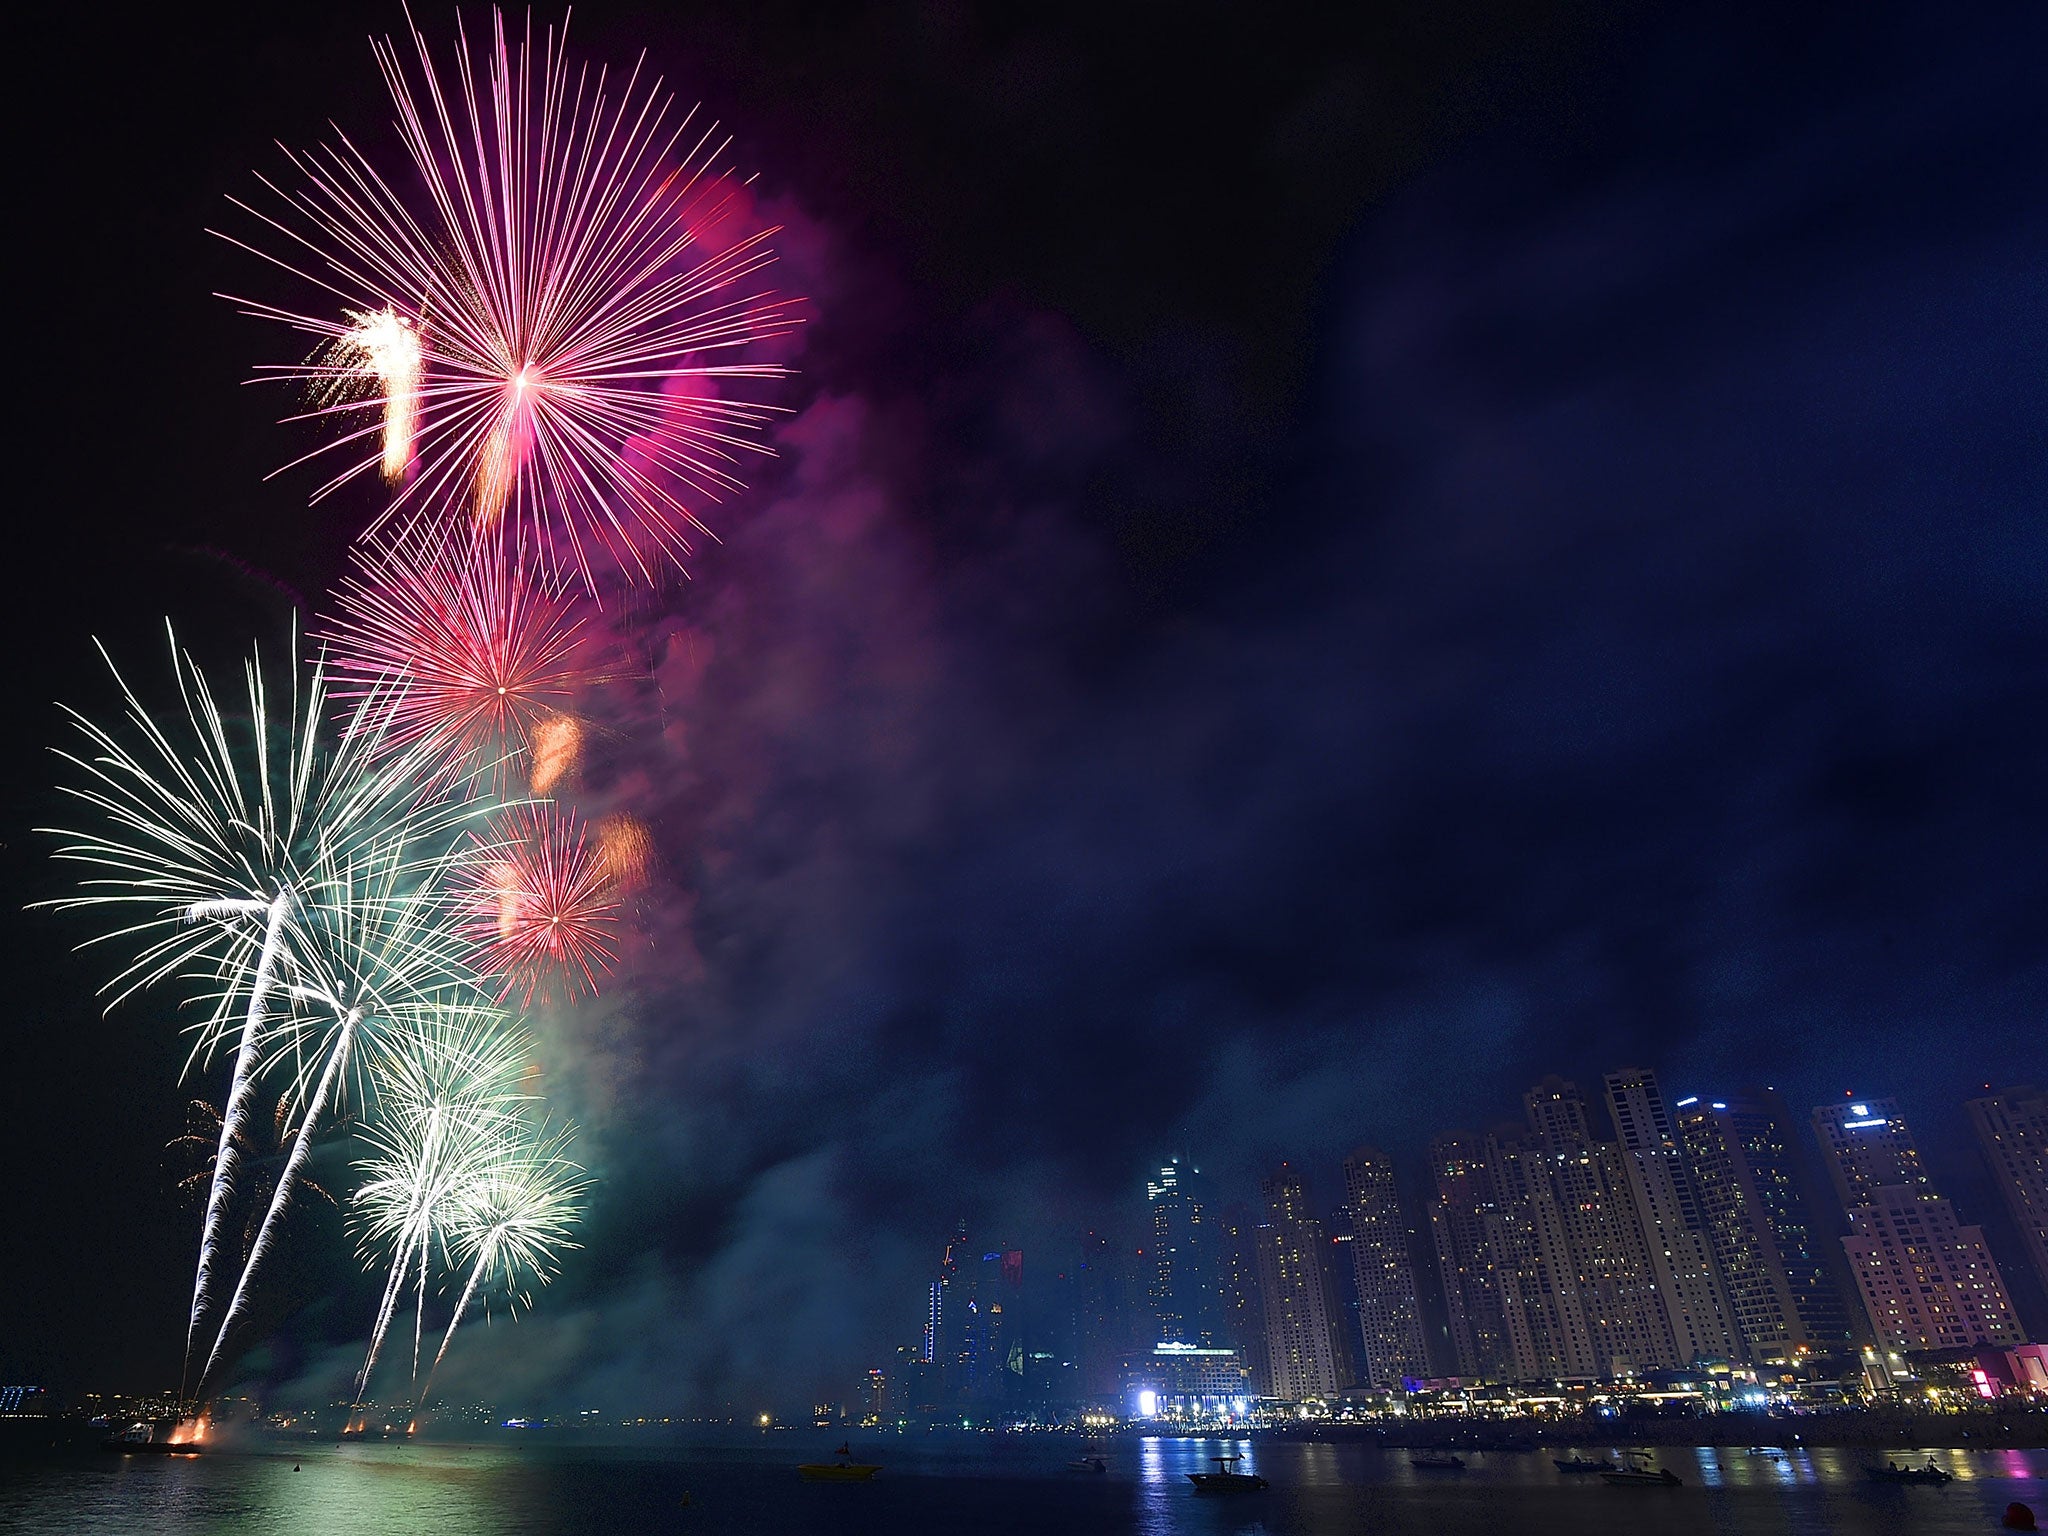 A celebratory fireworks display on September 11, 2016 in Dubai, United Arab Emirates